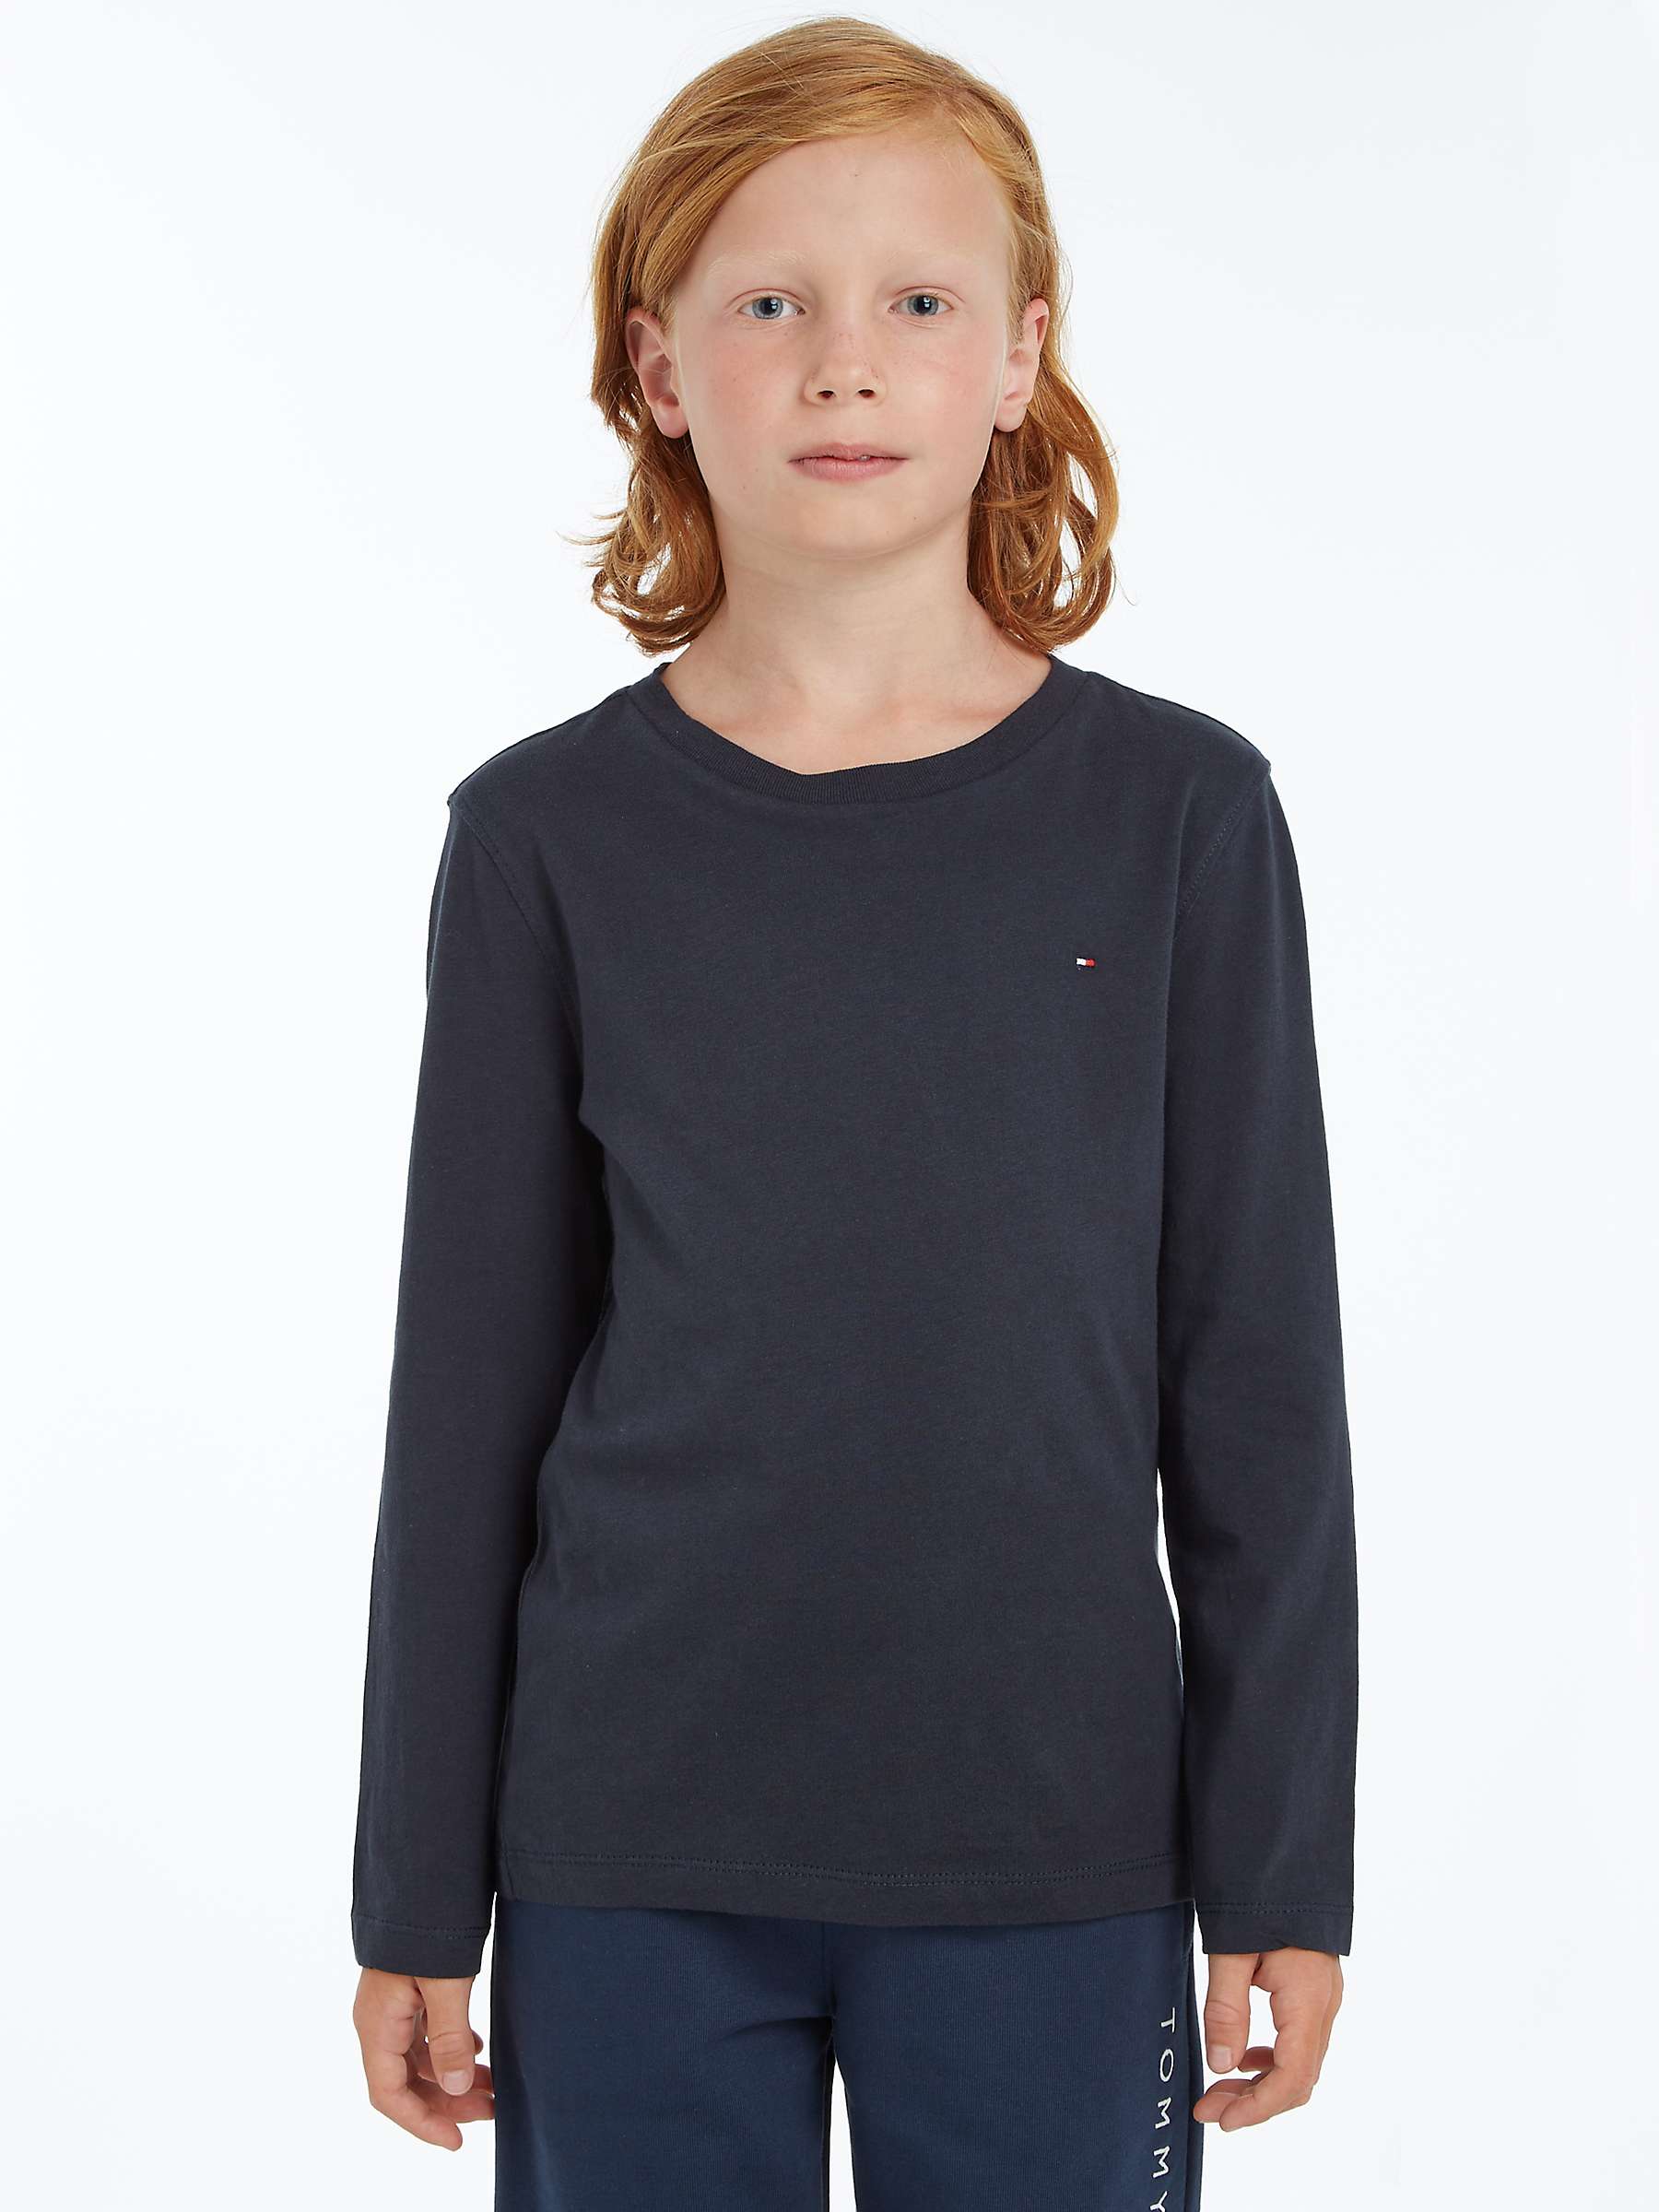 Buy Tommy Hilfiger Kids' Basic Crew Neck Long Sleeve Top Online at johnlewis.com